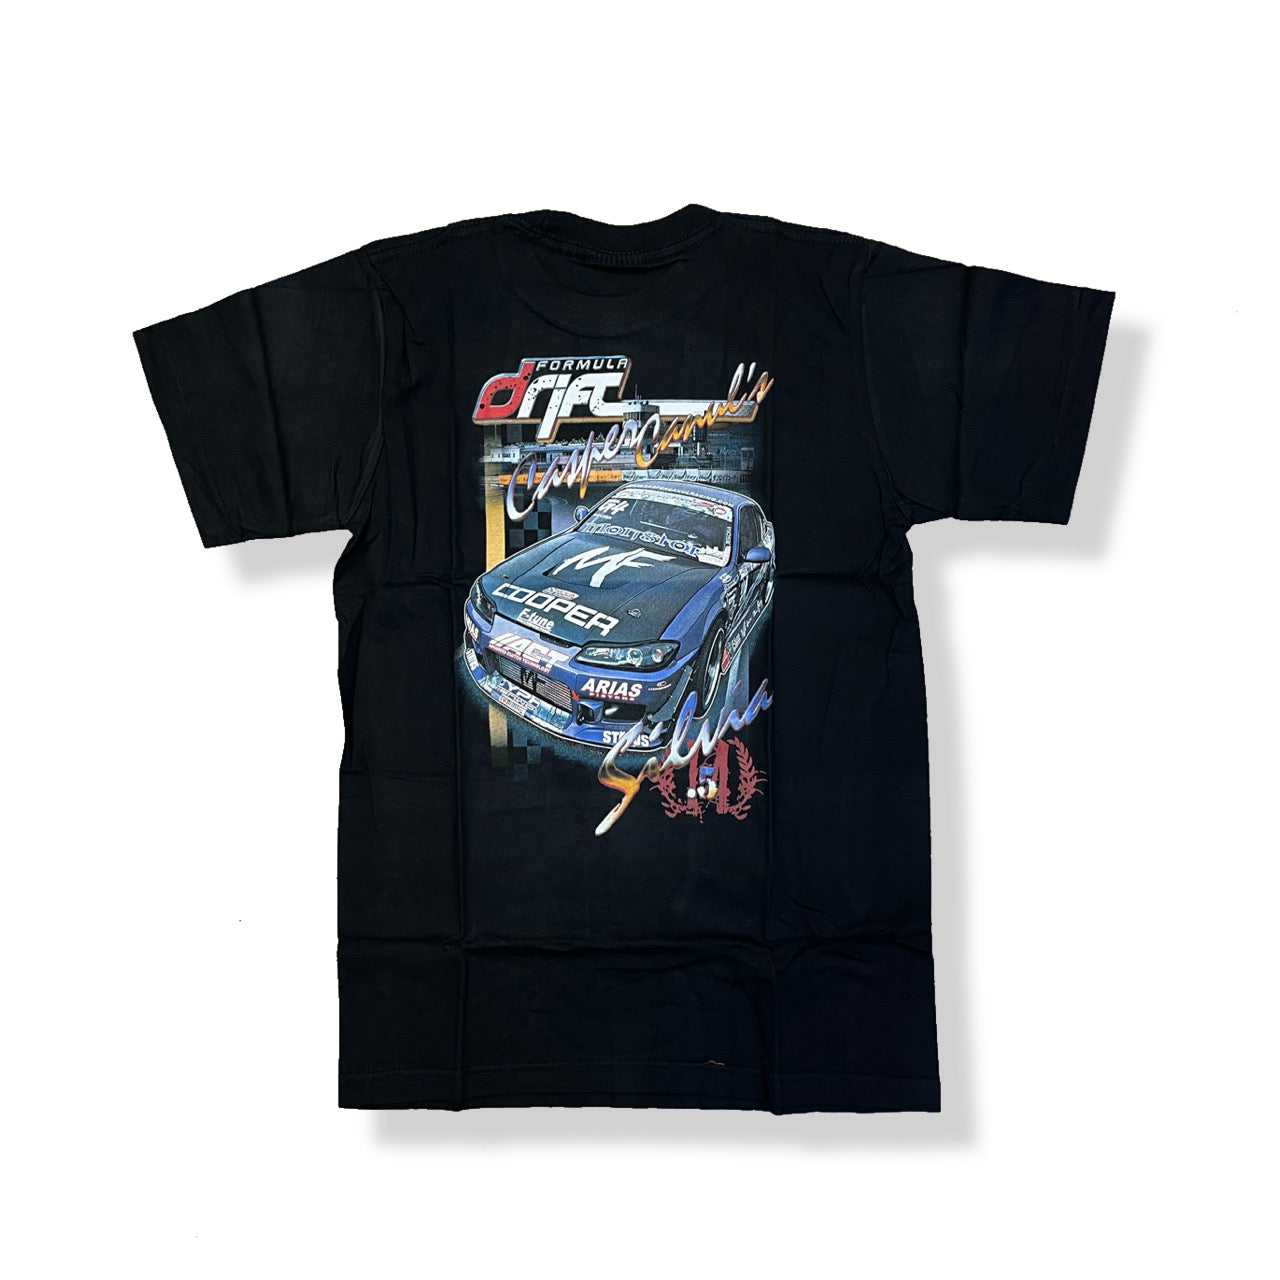 Formula Drift Casper Canul’s Silvia S15 T-shirt Black